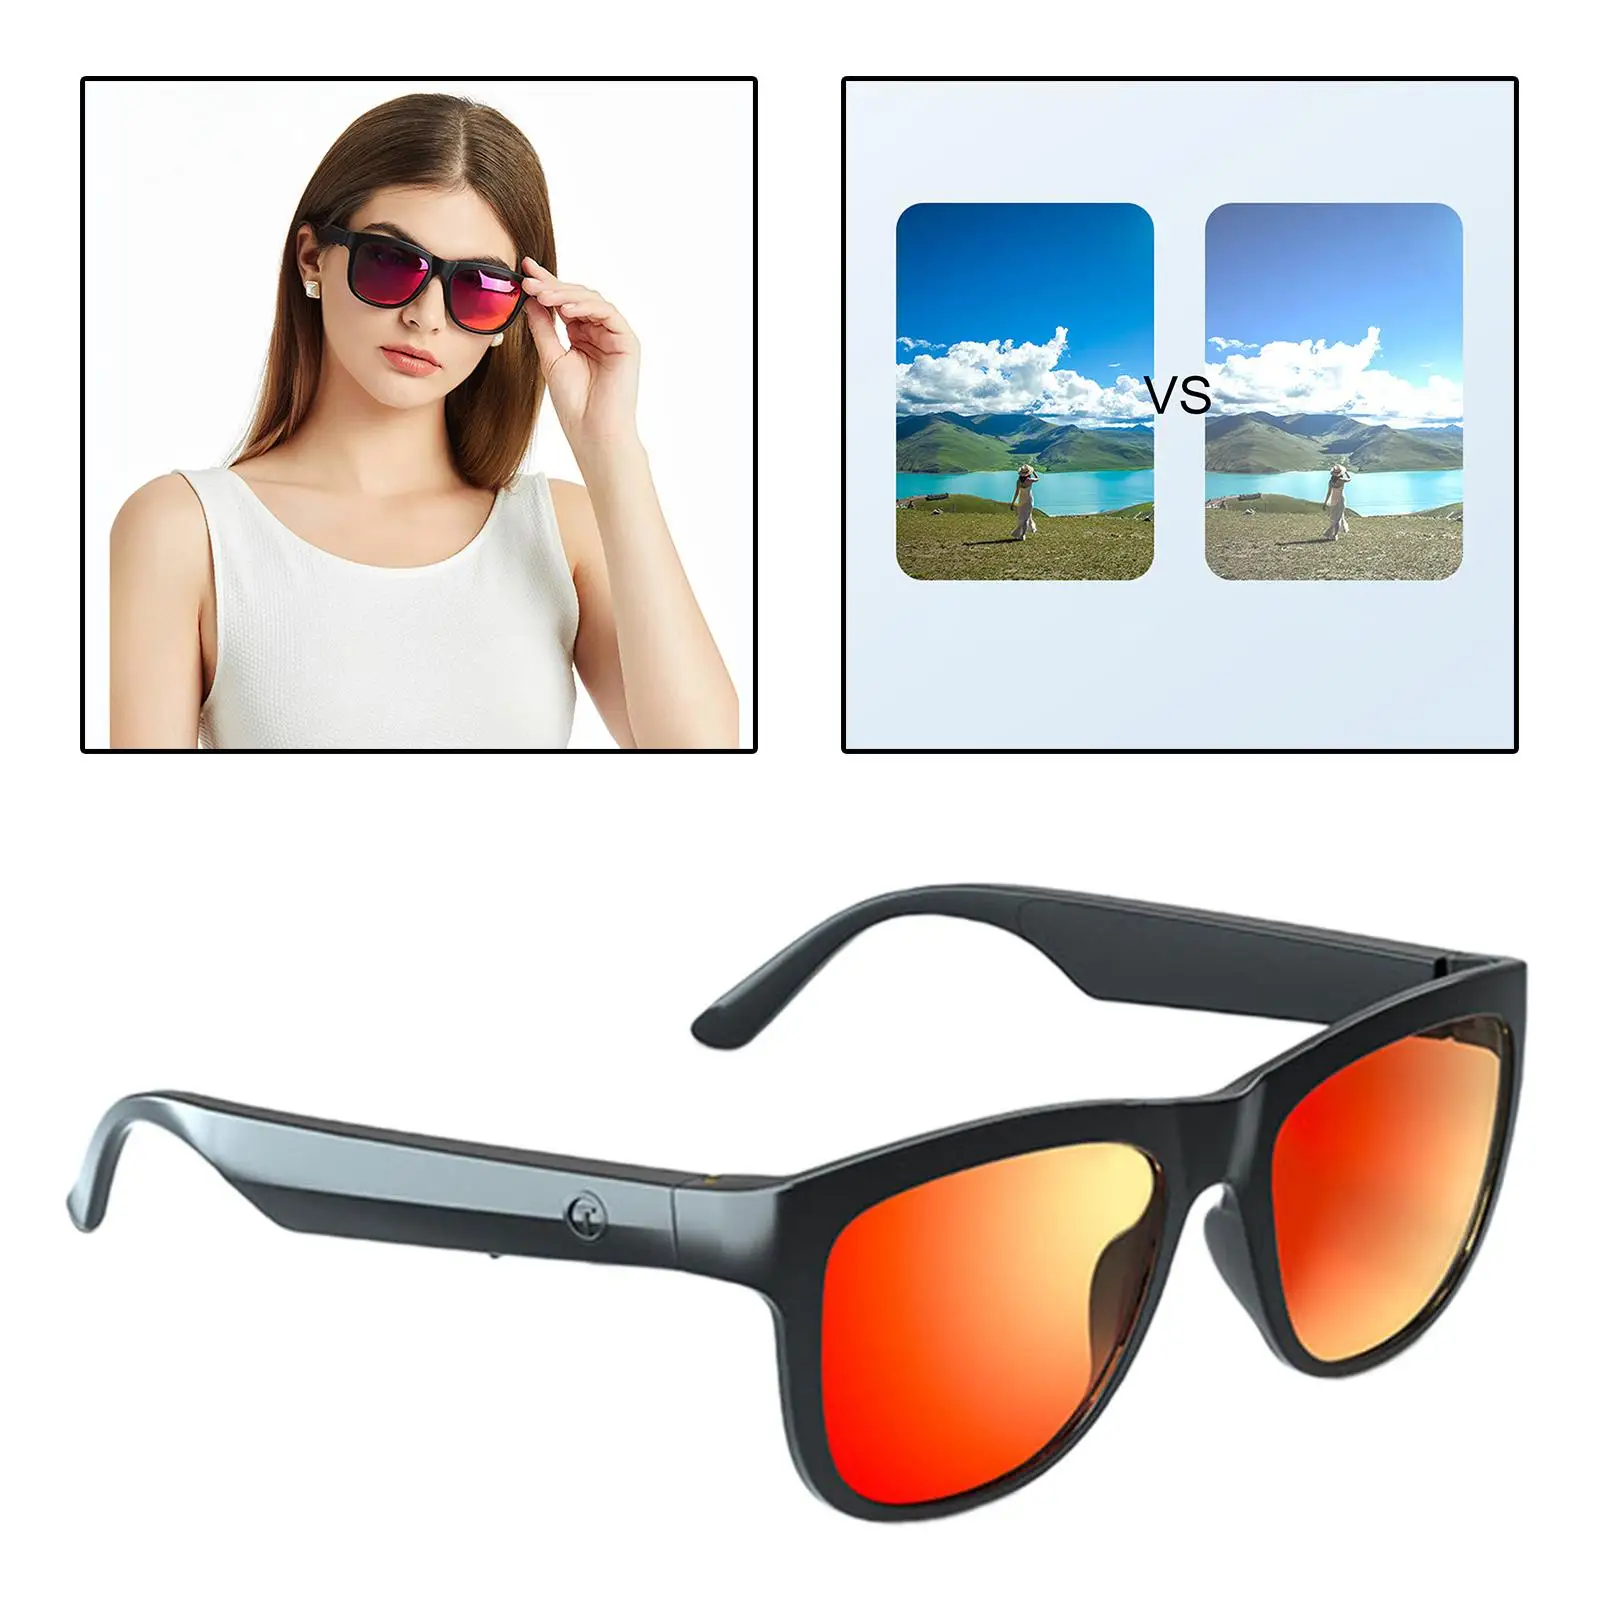 Bluetooth Audio Smart Glasses, Hands Free Calling Headset Speaker Sunglasses Headset Eyewear for Fitness Running Traveling